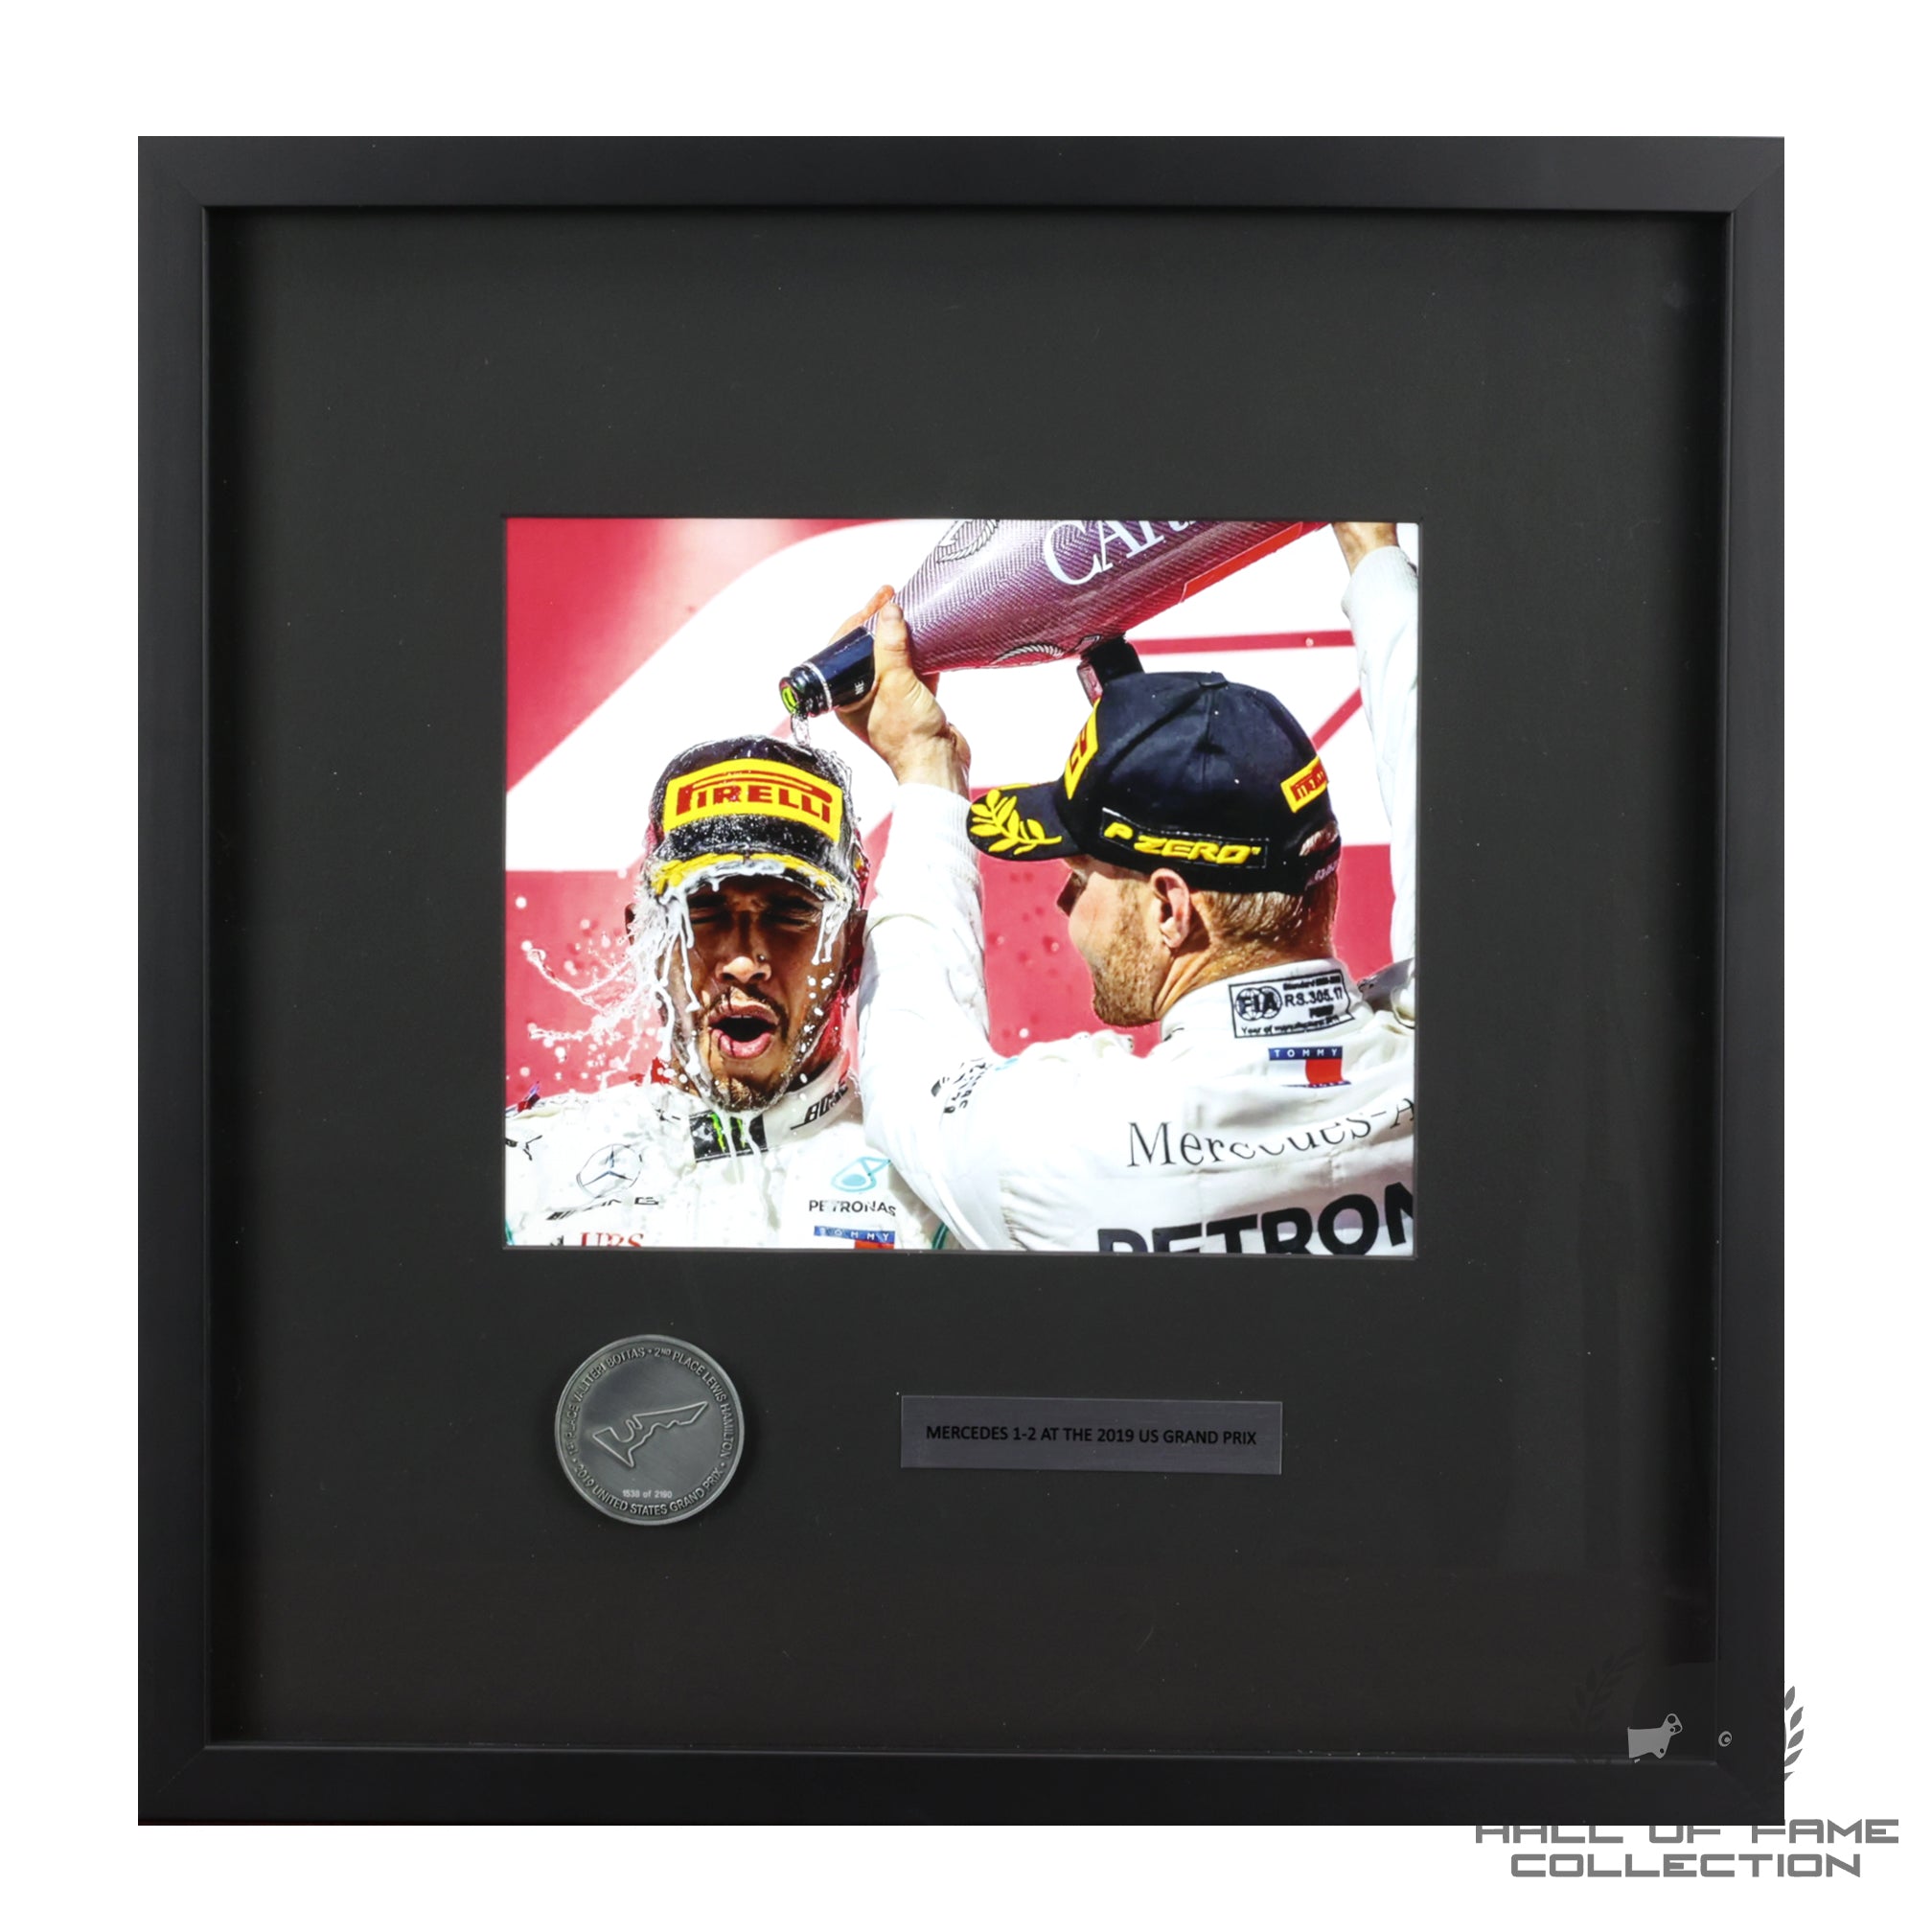 2019 Lewis Hamilton Valtteri Bottas United States Grand Prix Framed Mercedes Team F1 Medallion & Photo